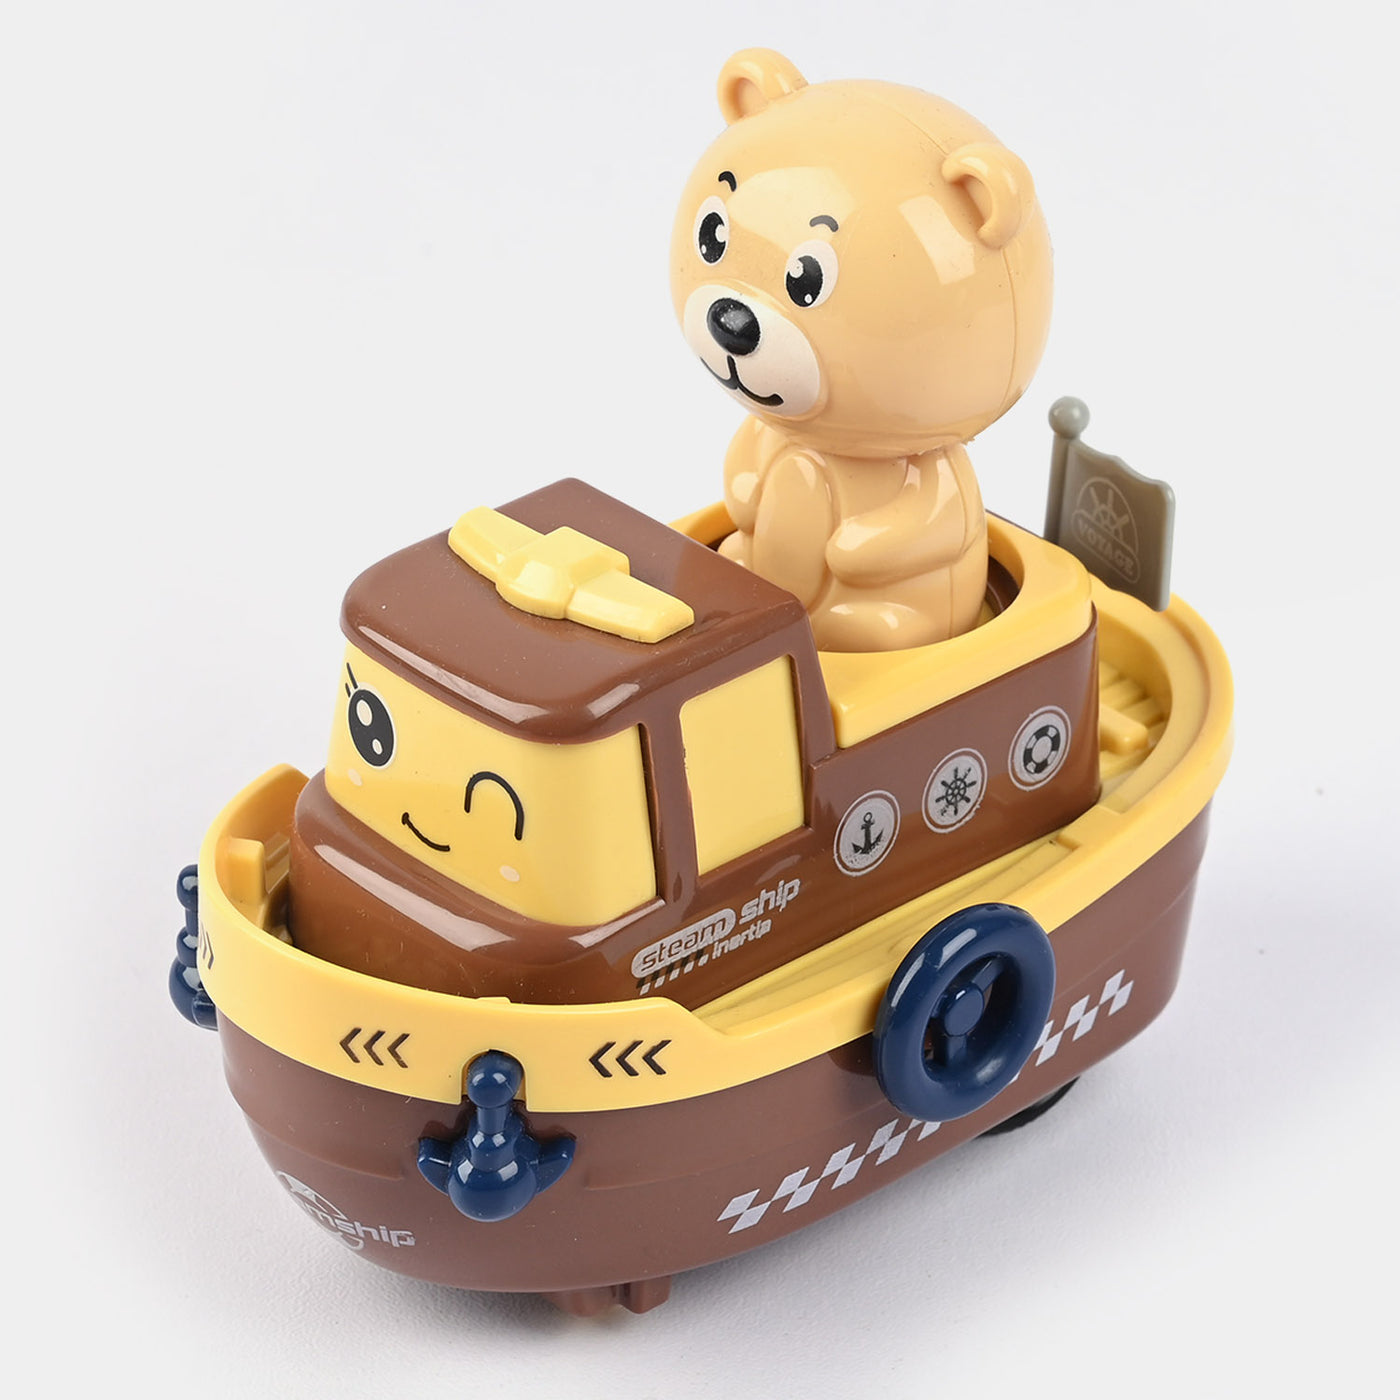 Press Bear Dinky Car Toy For Kids